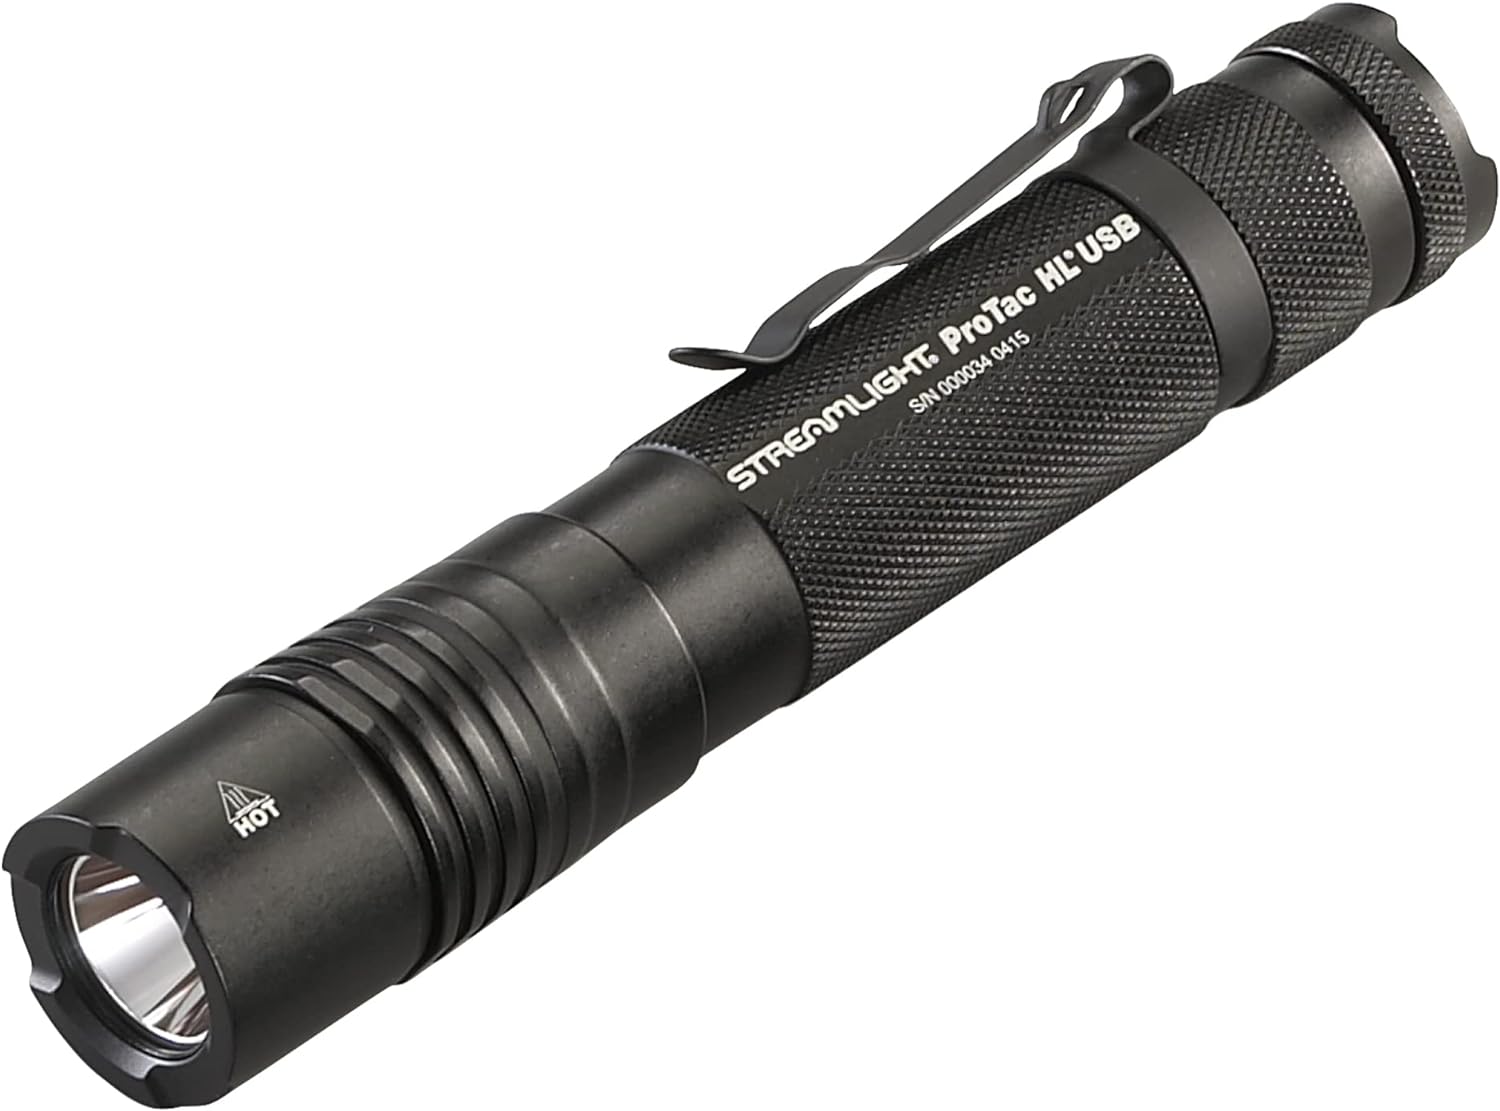 Streamlight 88054 ProTac HL USB 1000-Lumen Flashlight Review